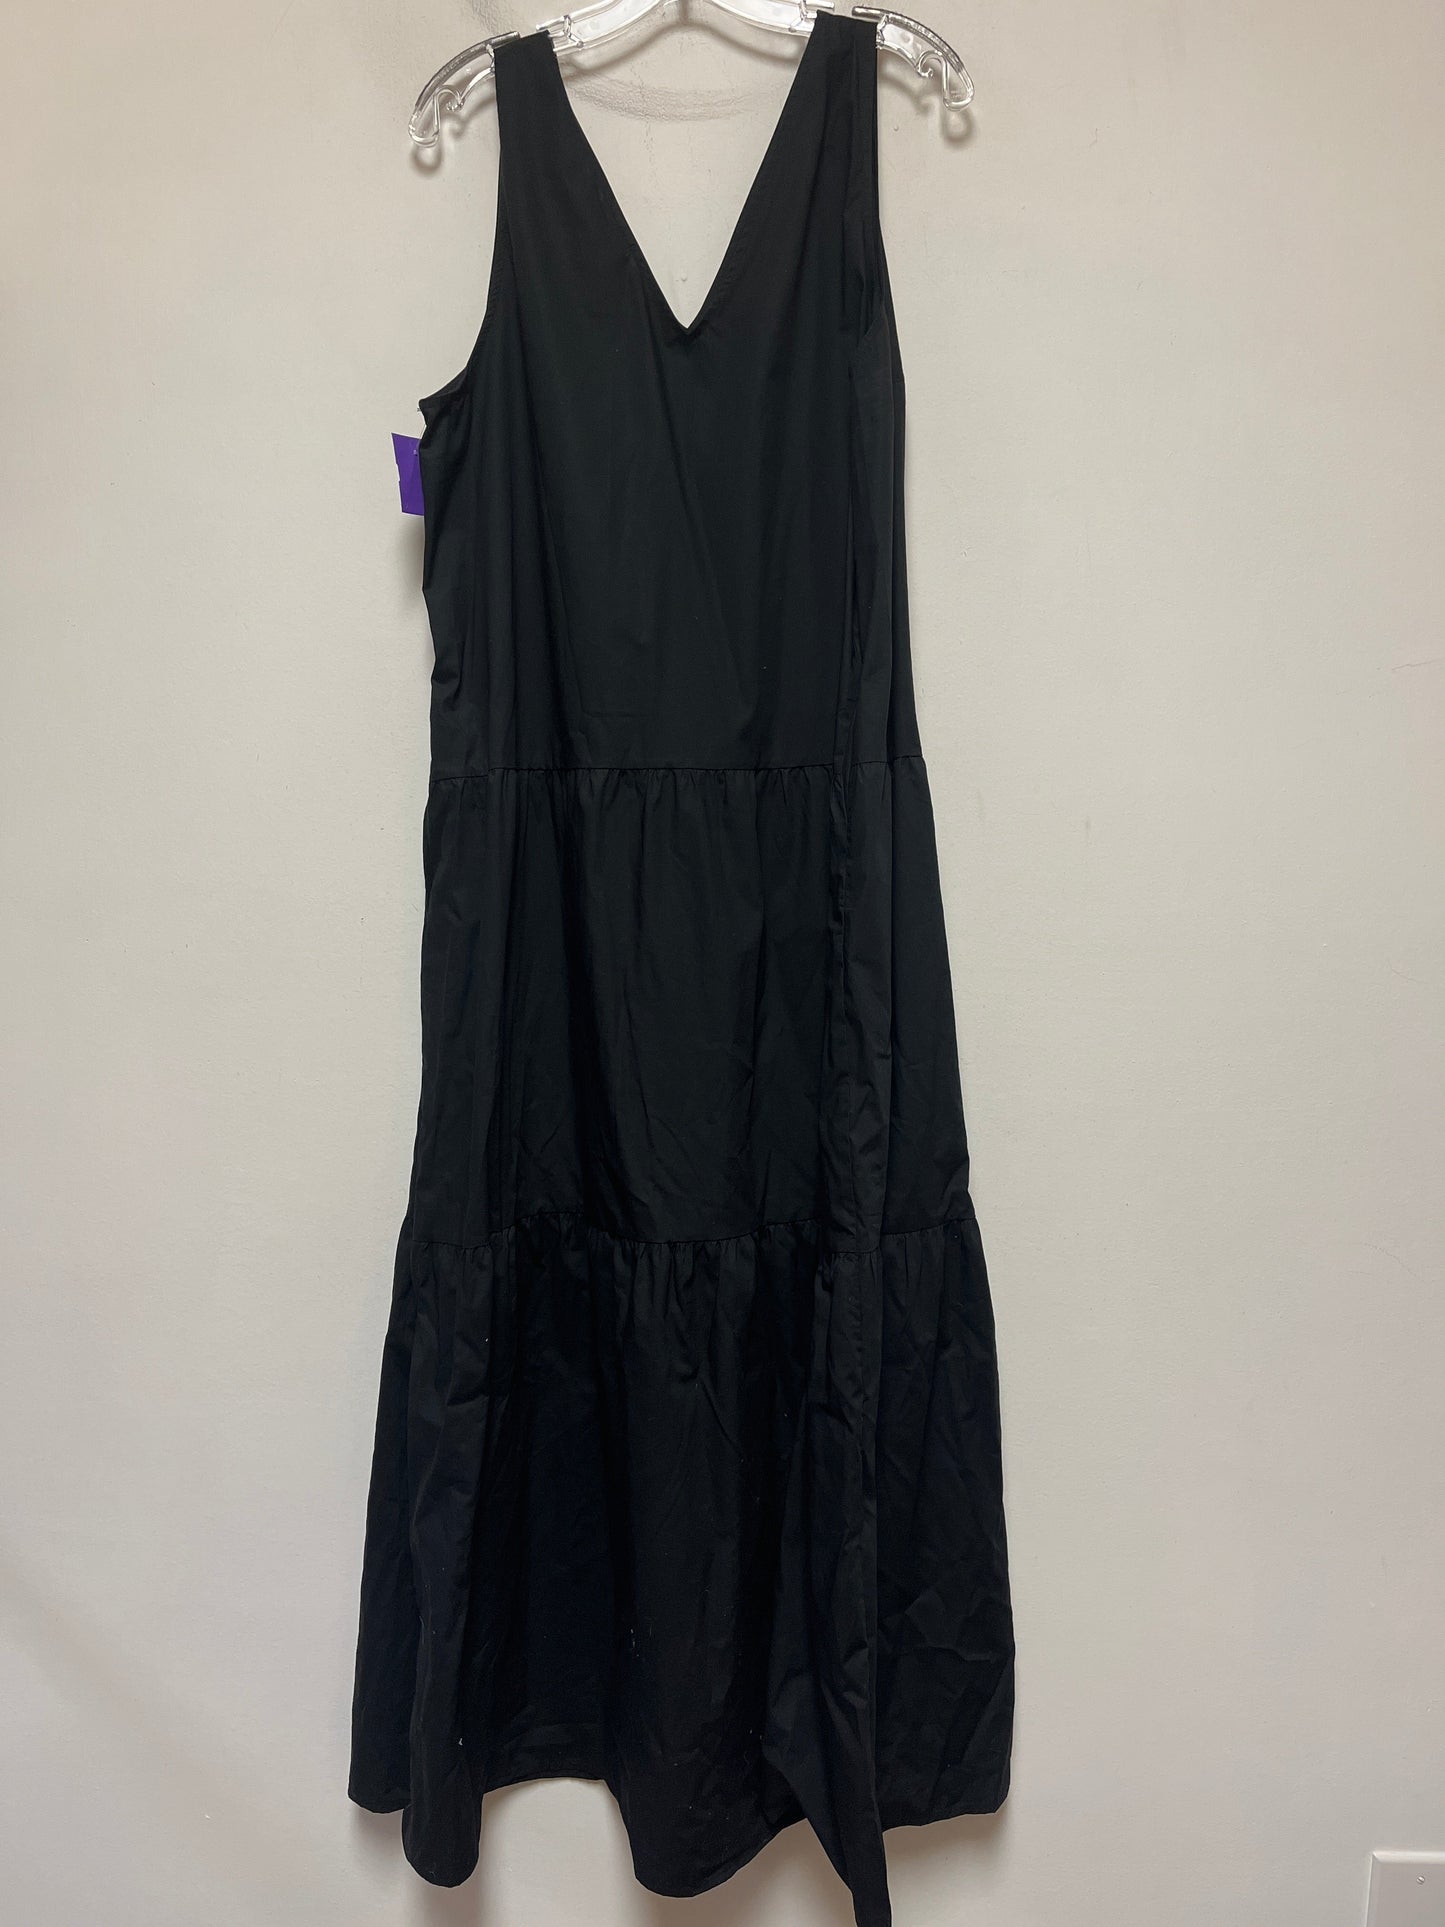 Black Dress Casual Maxi Who What Wear, Size Xxl